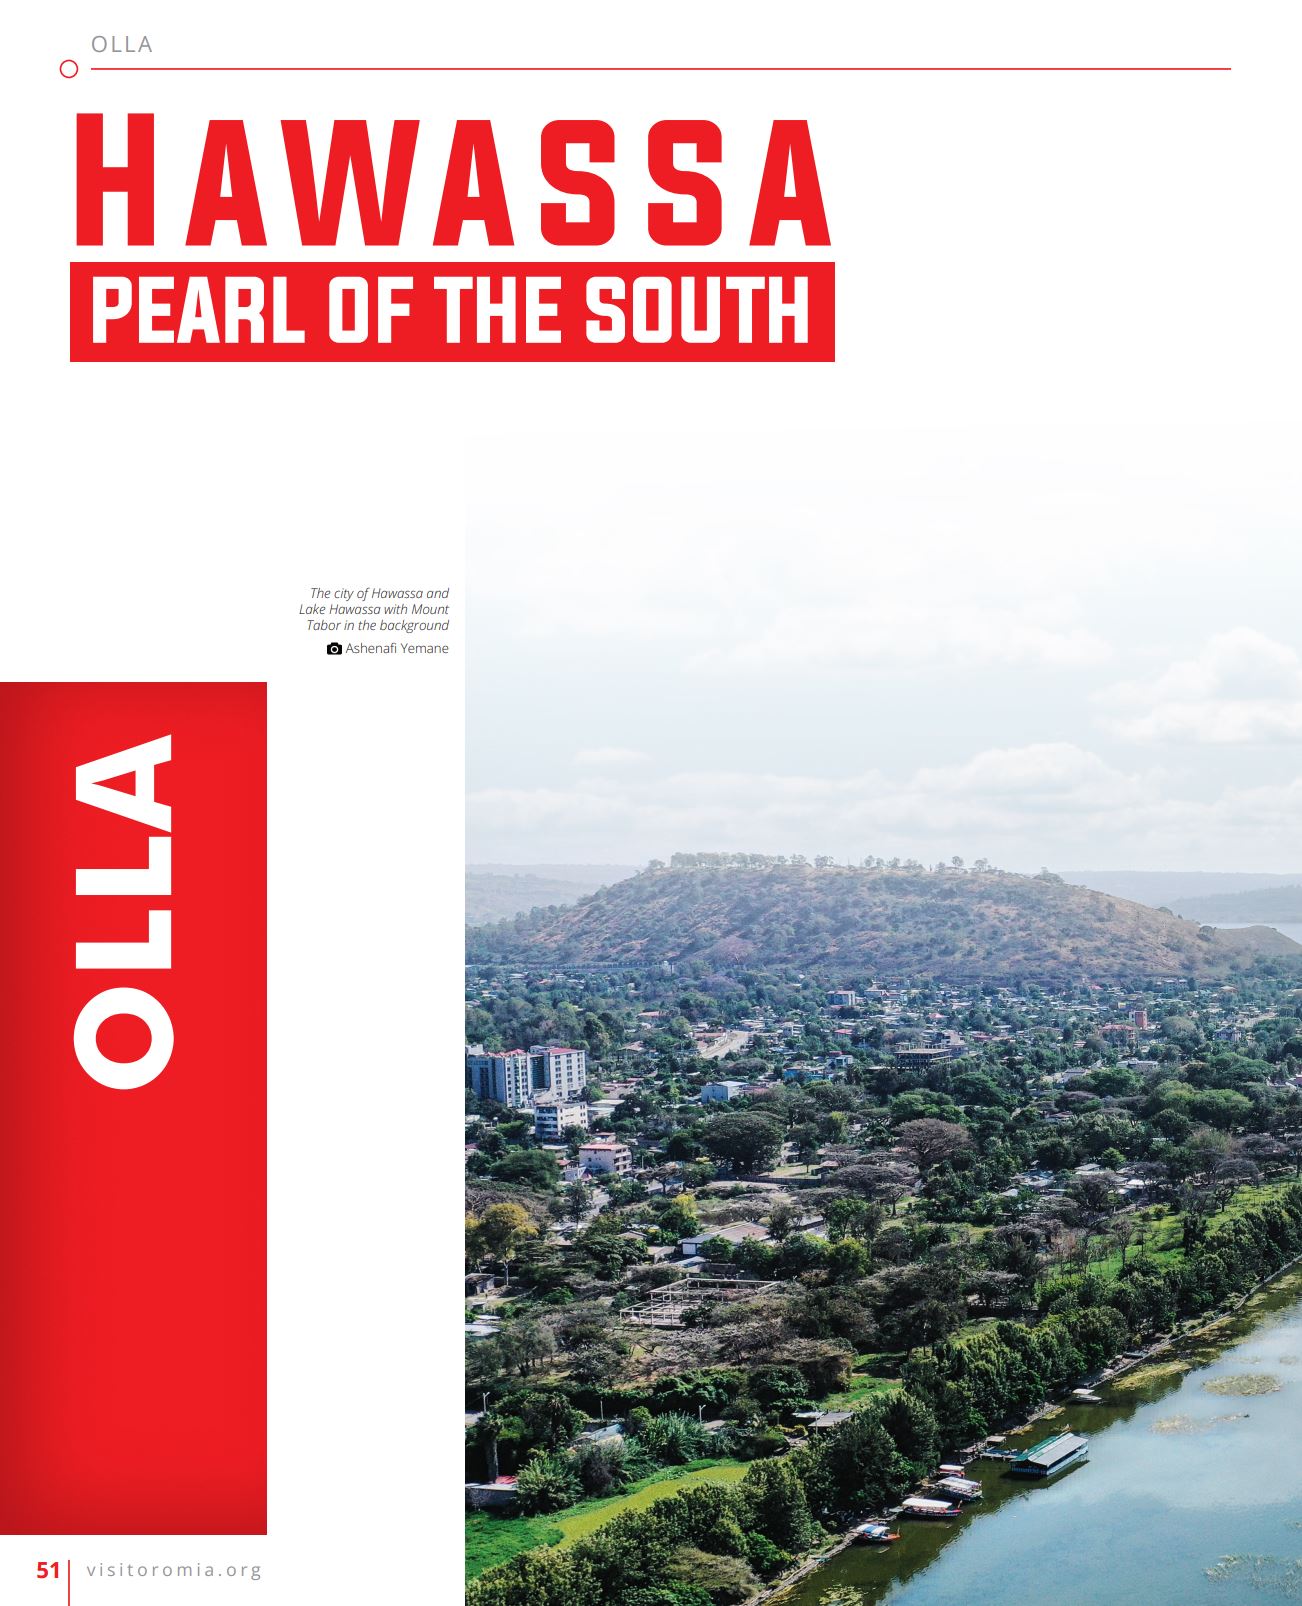 HAWASSA PEARL OF THE SOUTH